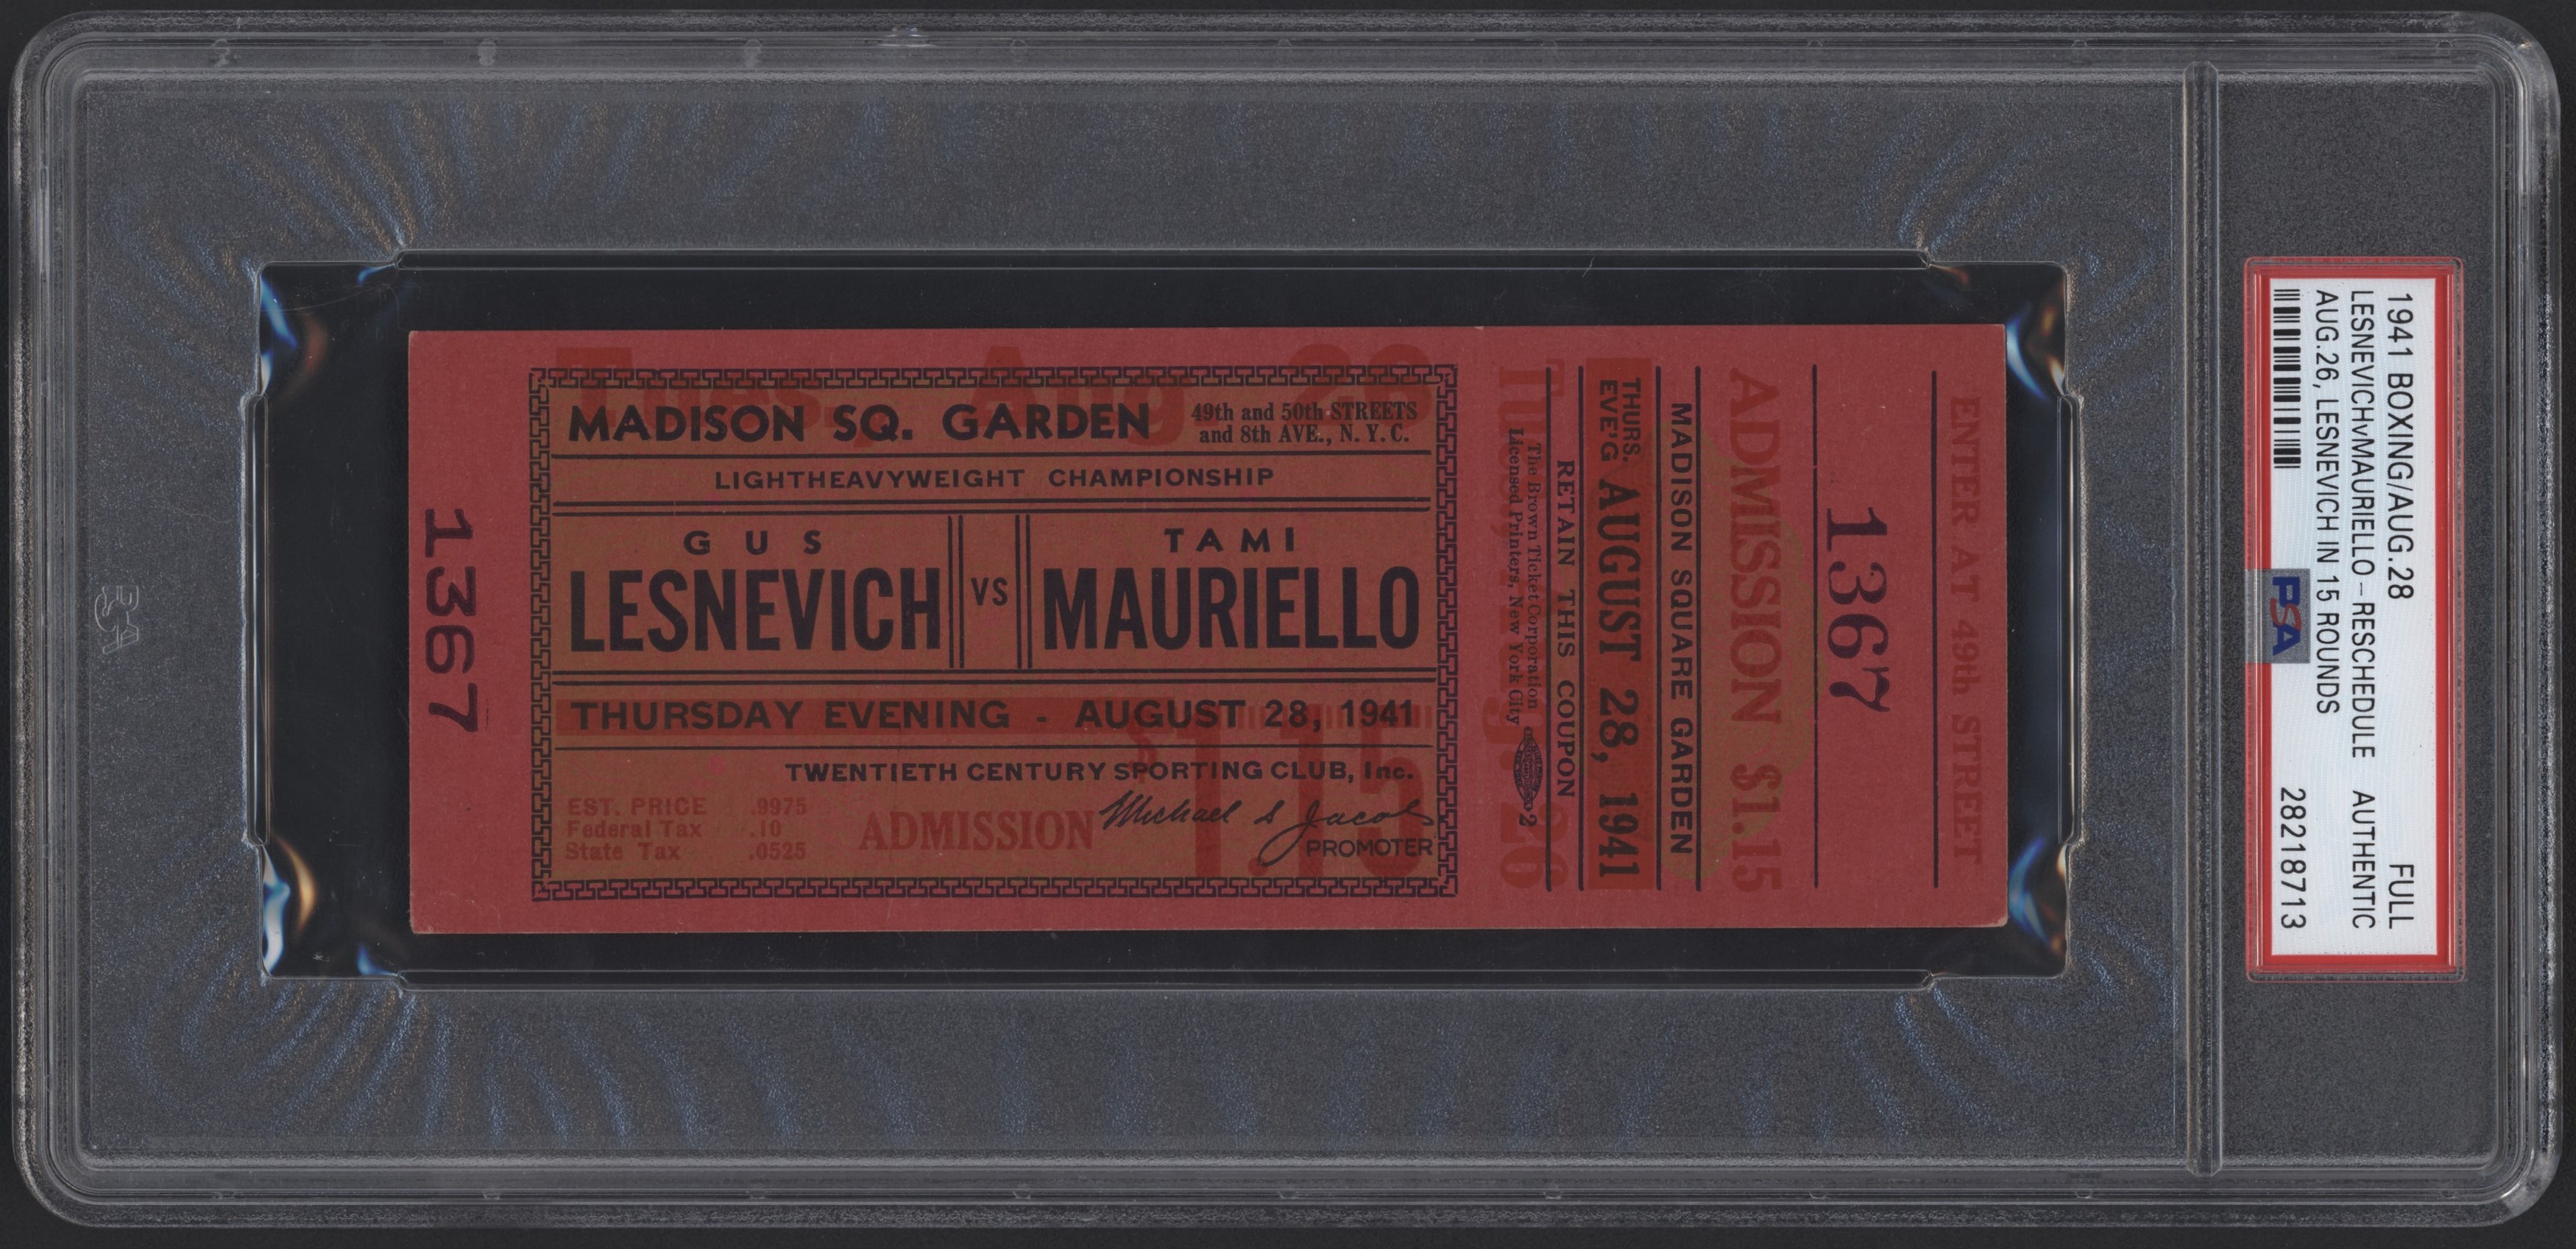 - 1941 Gus Lesnevich vs. Tami Mauriello Full Ticket